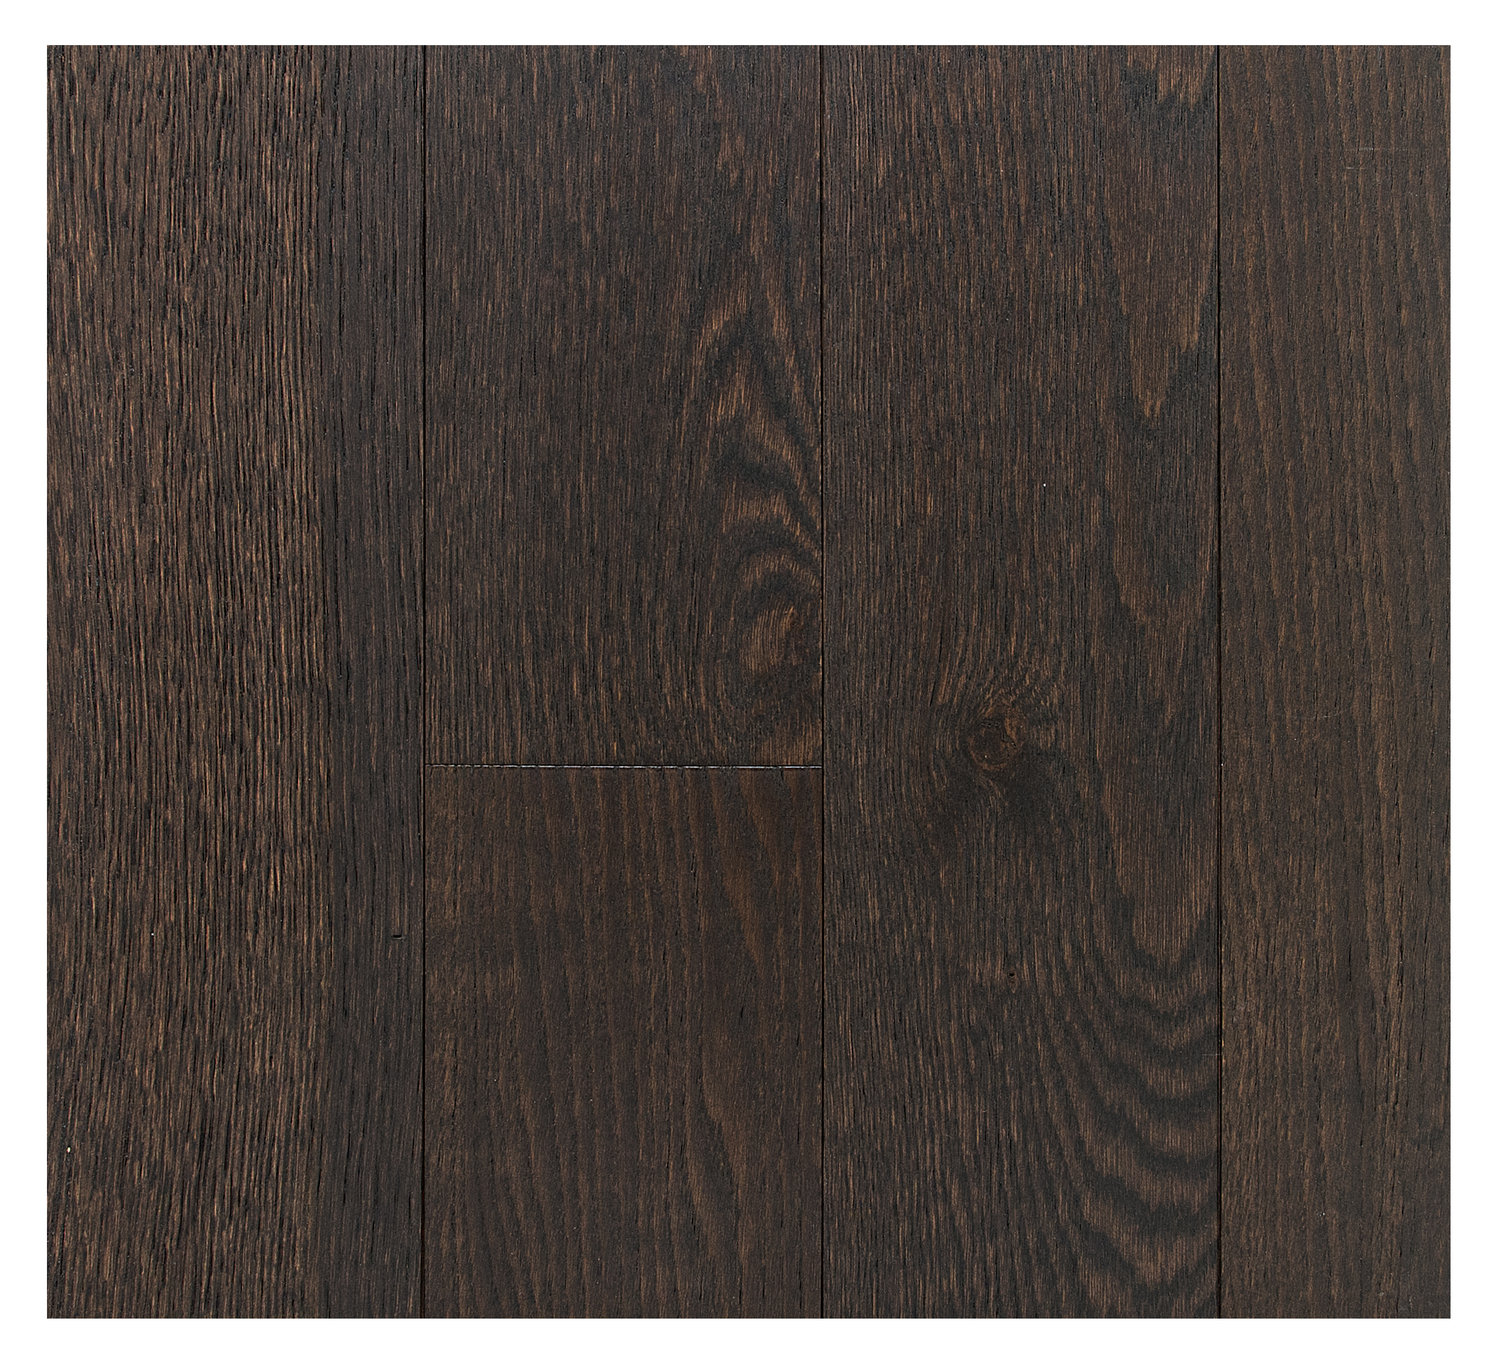 Baroque White Oak Boardwalk Hardwood, Baroque Hardwood Flooring Reviews